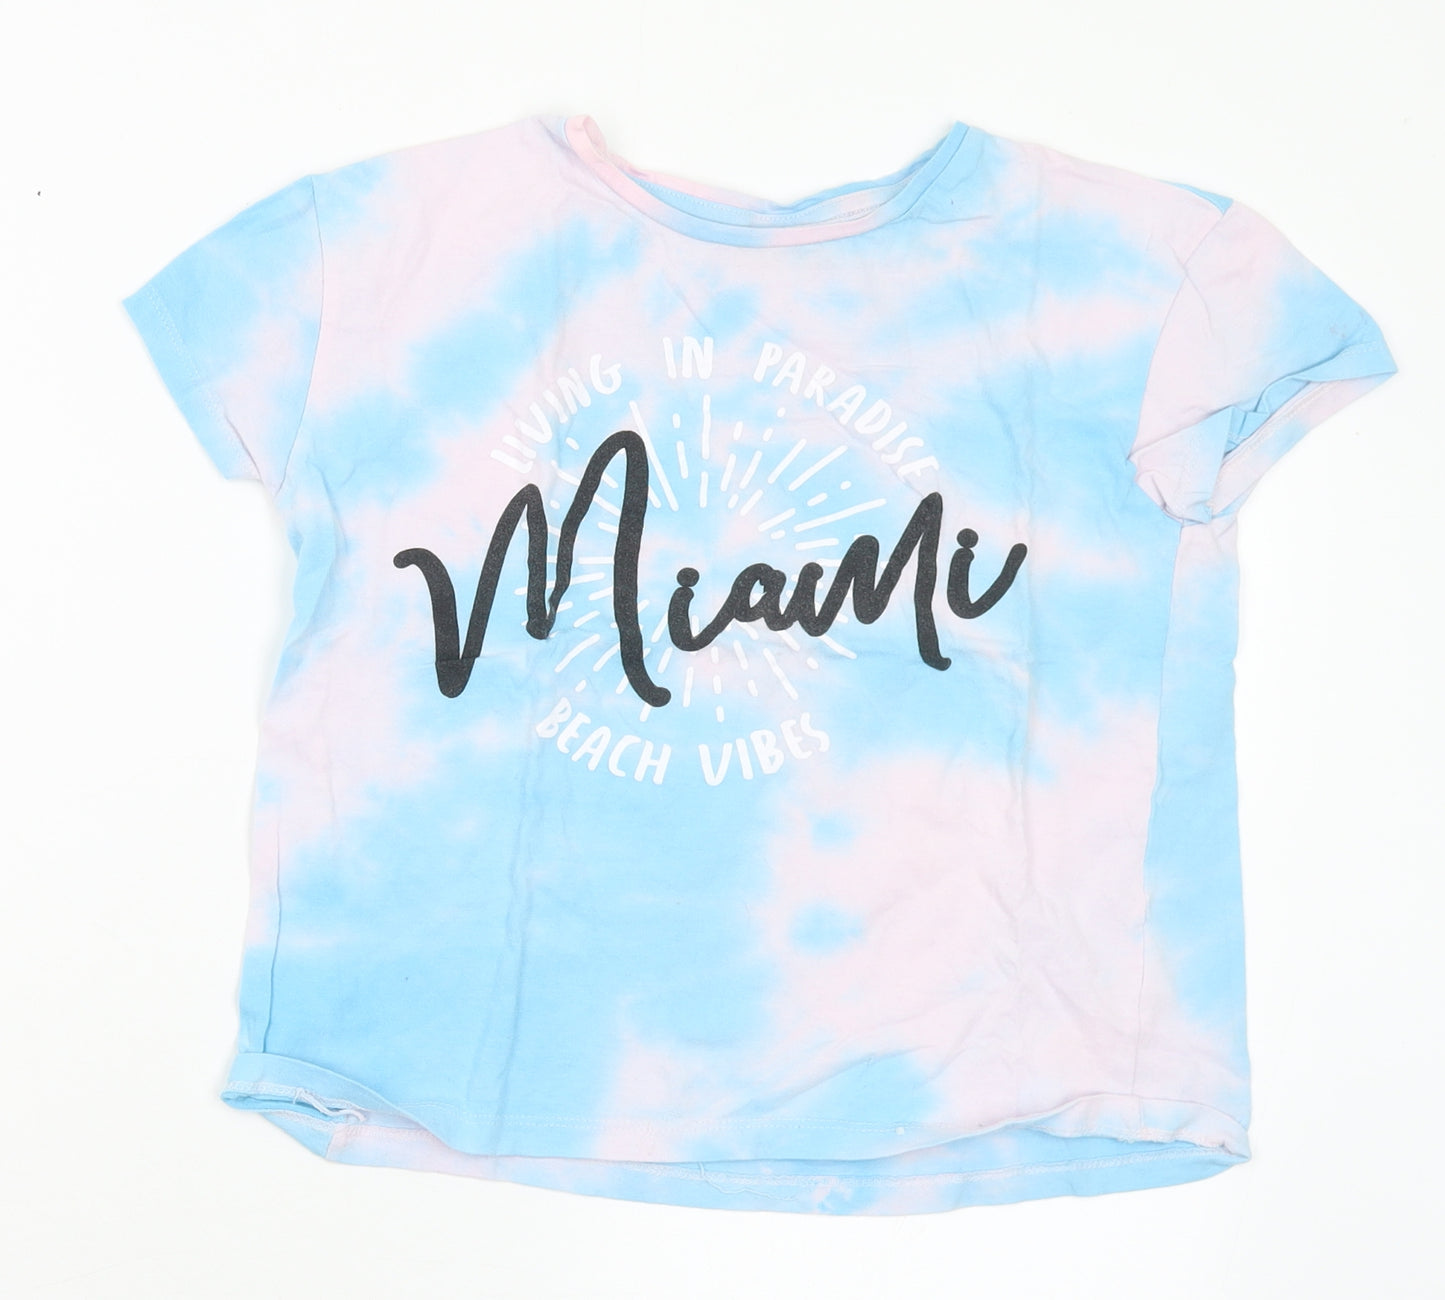 Destination Girls Multicoloured Cotton Basic T-Shirt Size 11-12 Years Round Neck - Miami. Tie Dye Effect